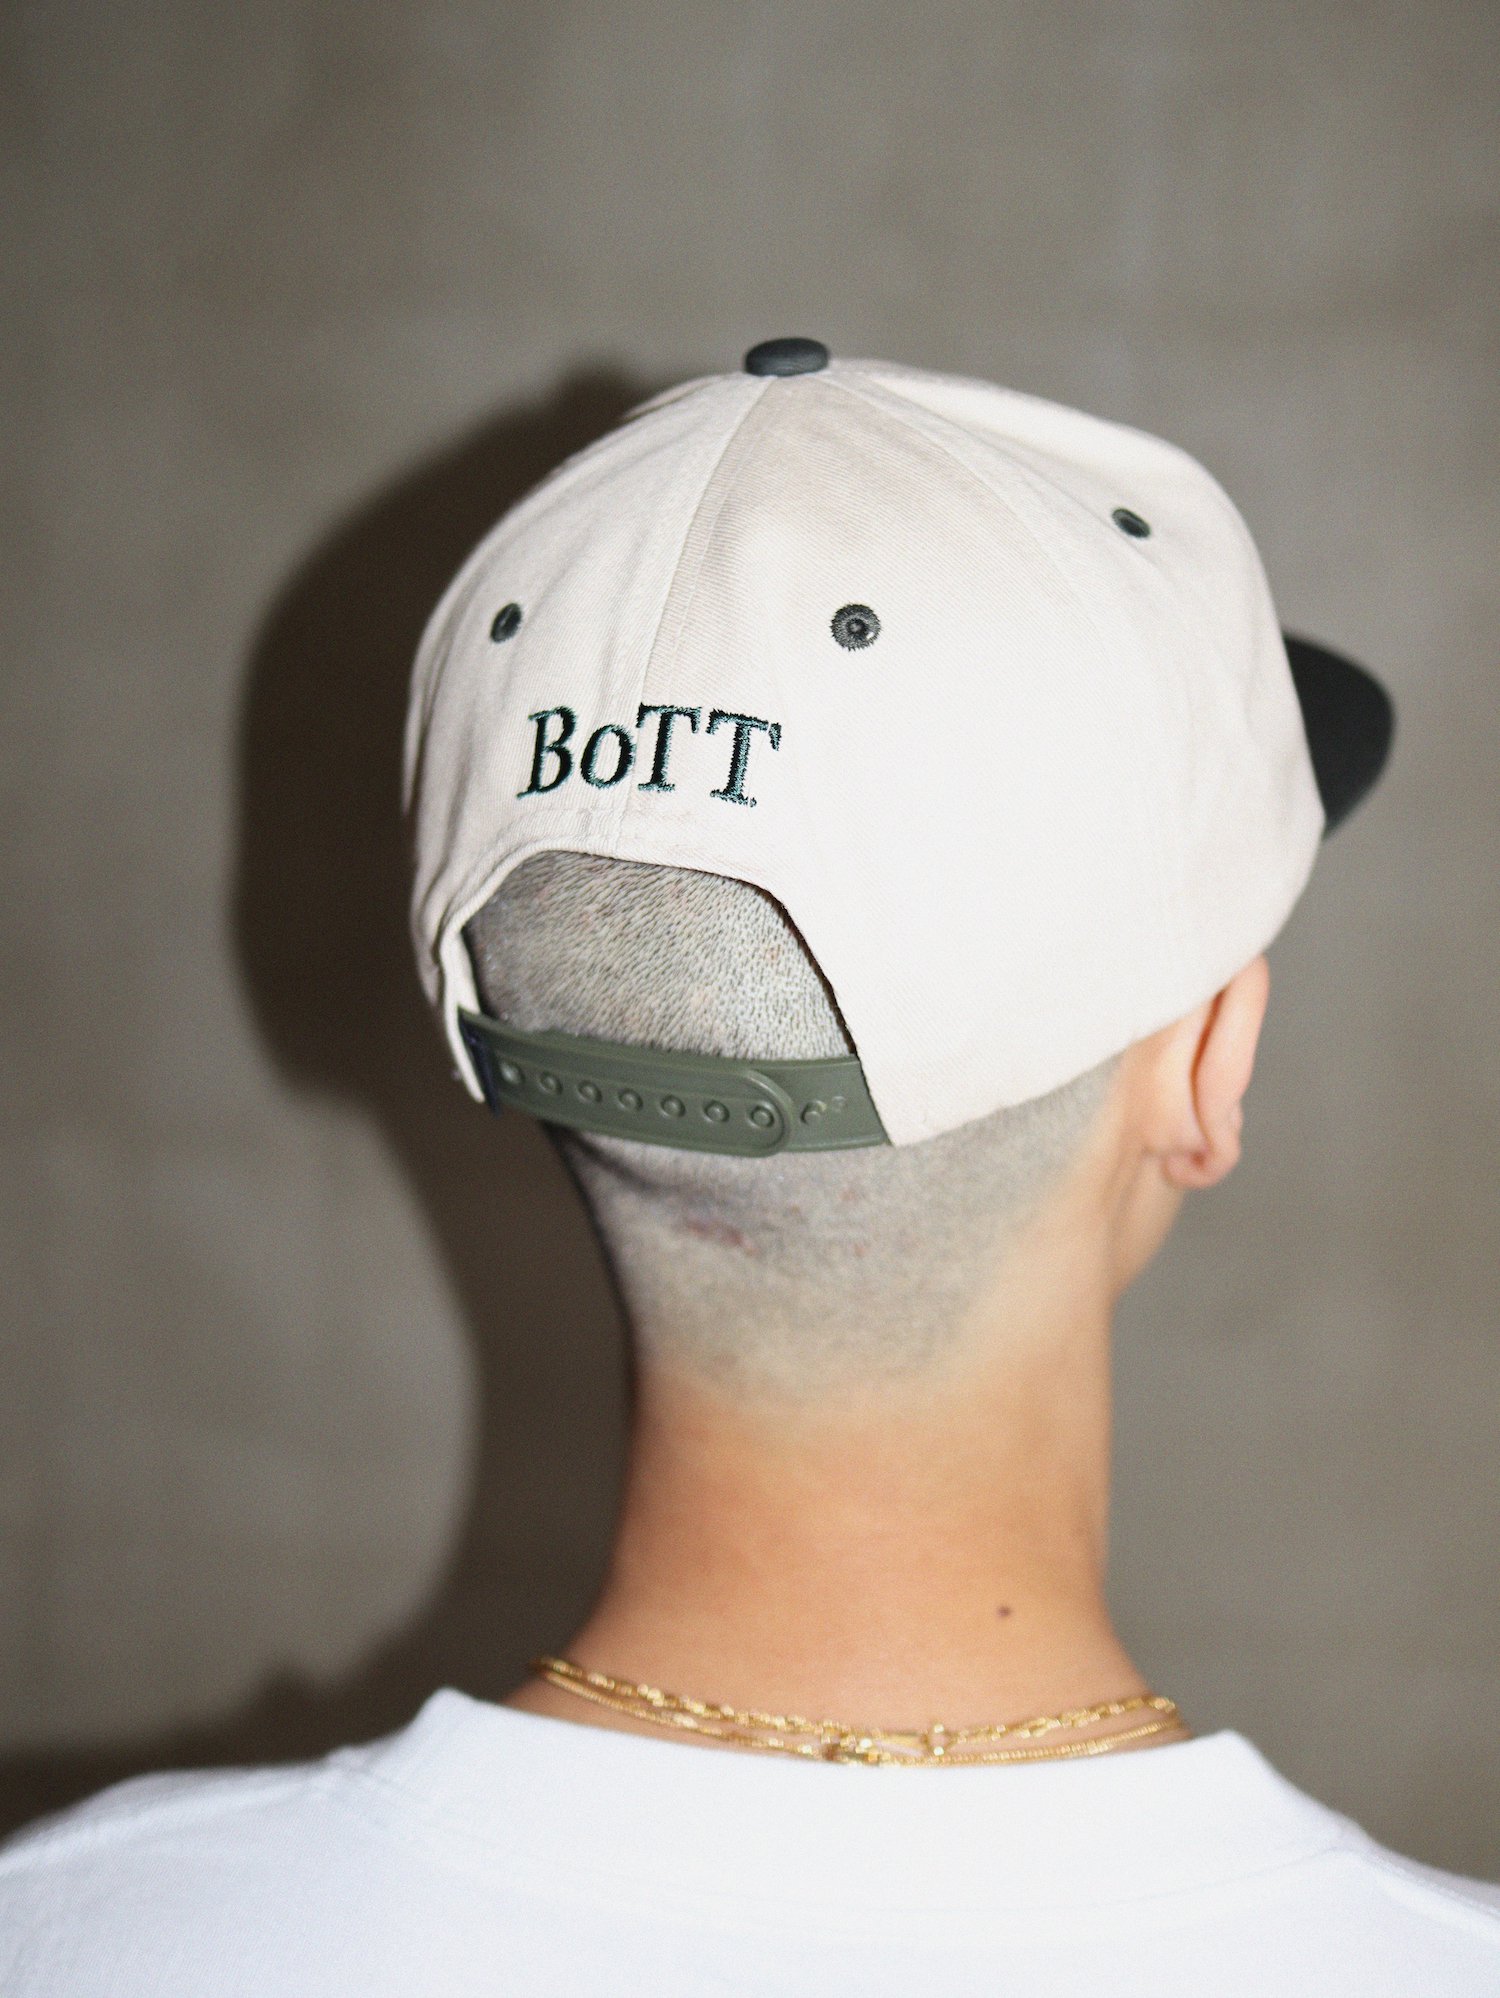 Bottキャップ - 帽子